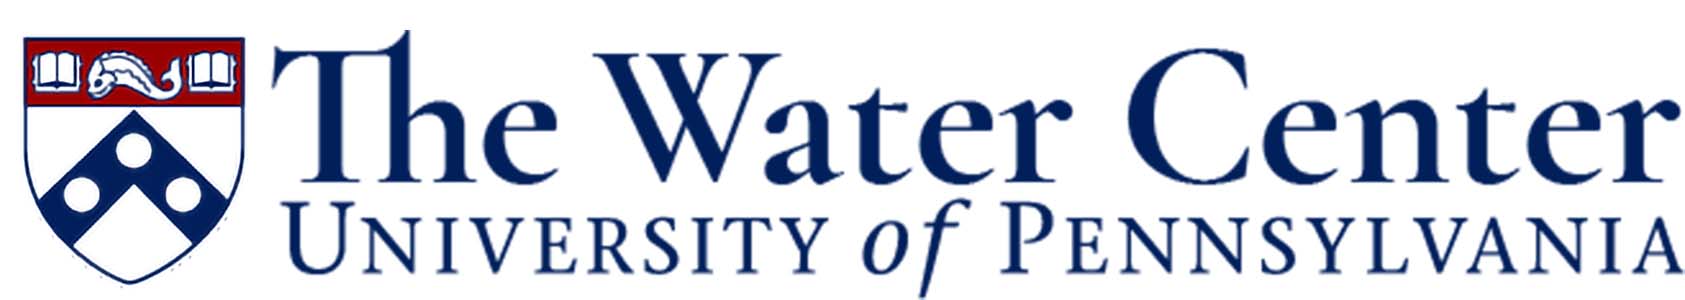 The Water center University of Pennsylvania Logo